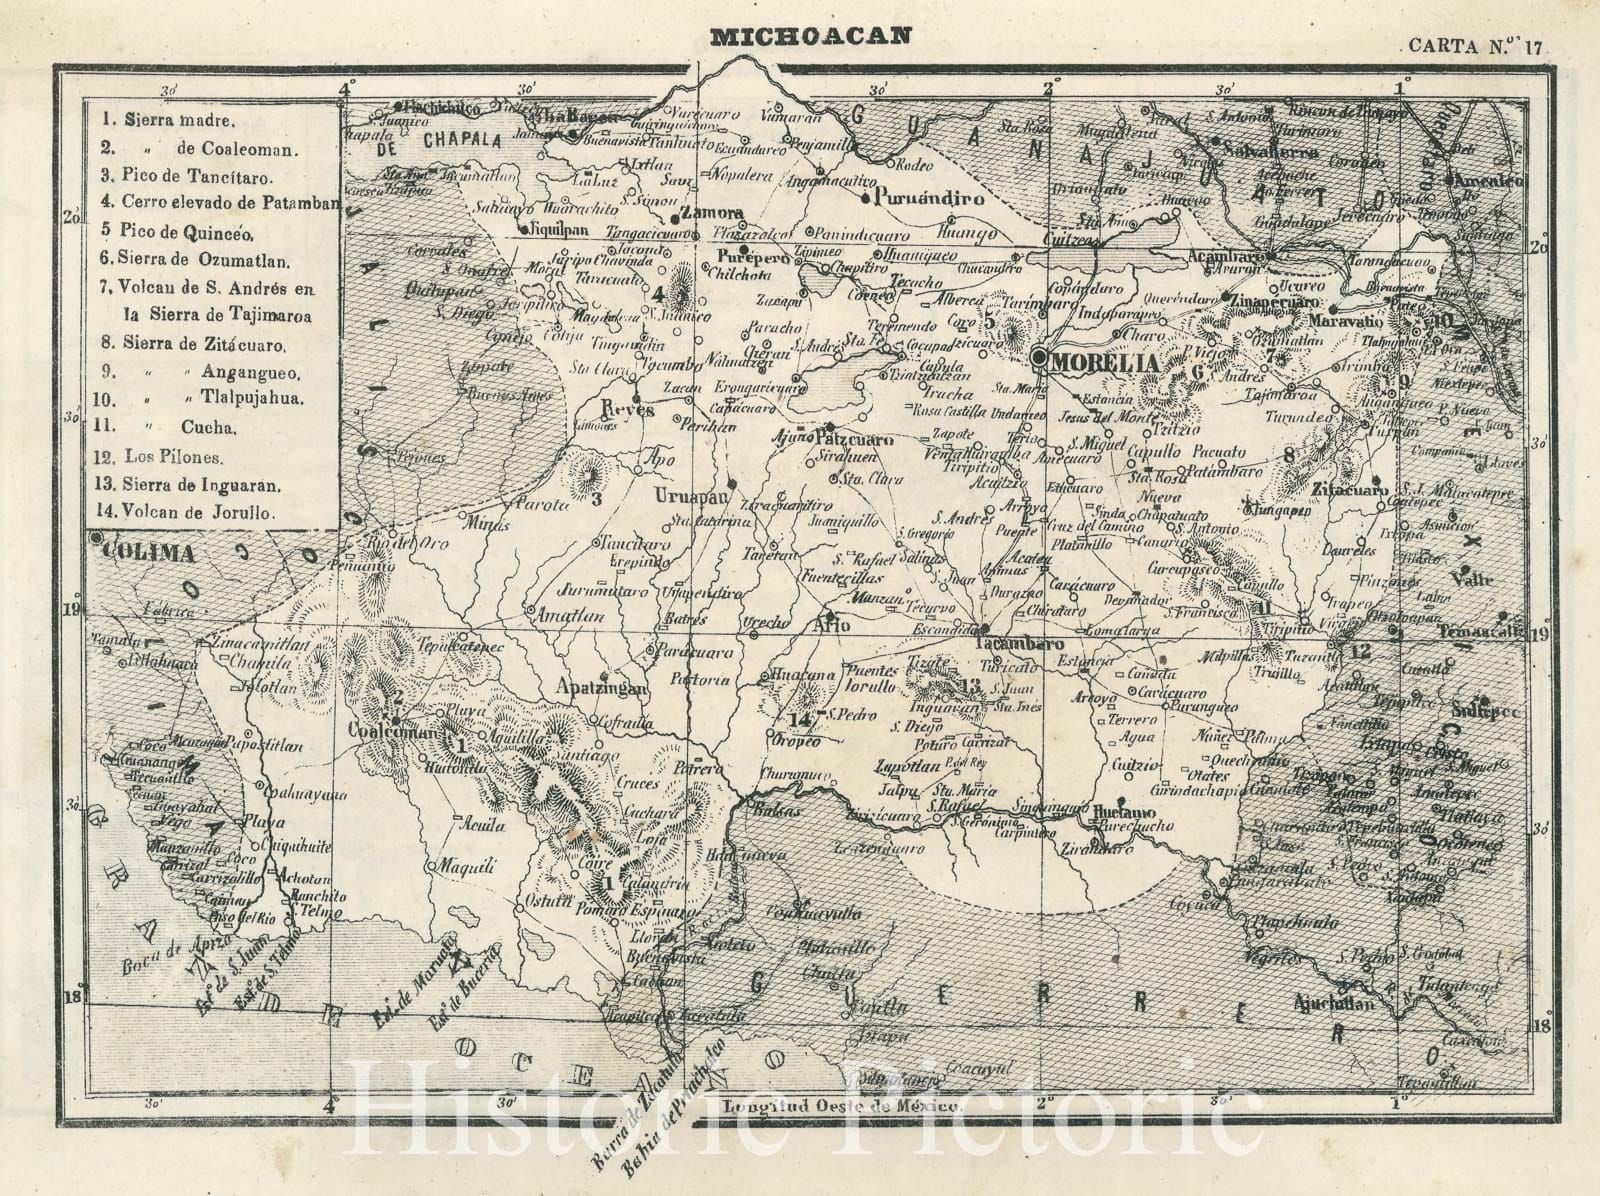 Historic Map : Text and Map: XIII. Michoacan. Carta No. 17., 1874, Vintage Wall Decor